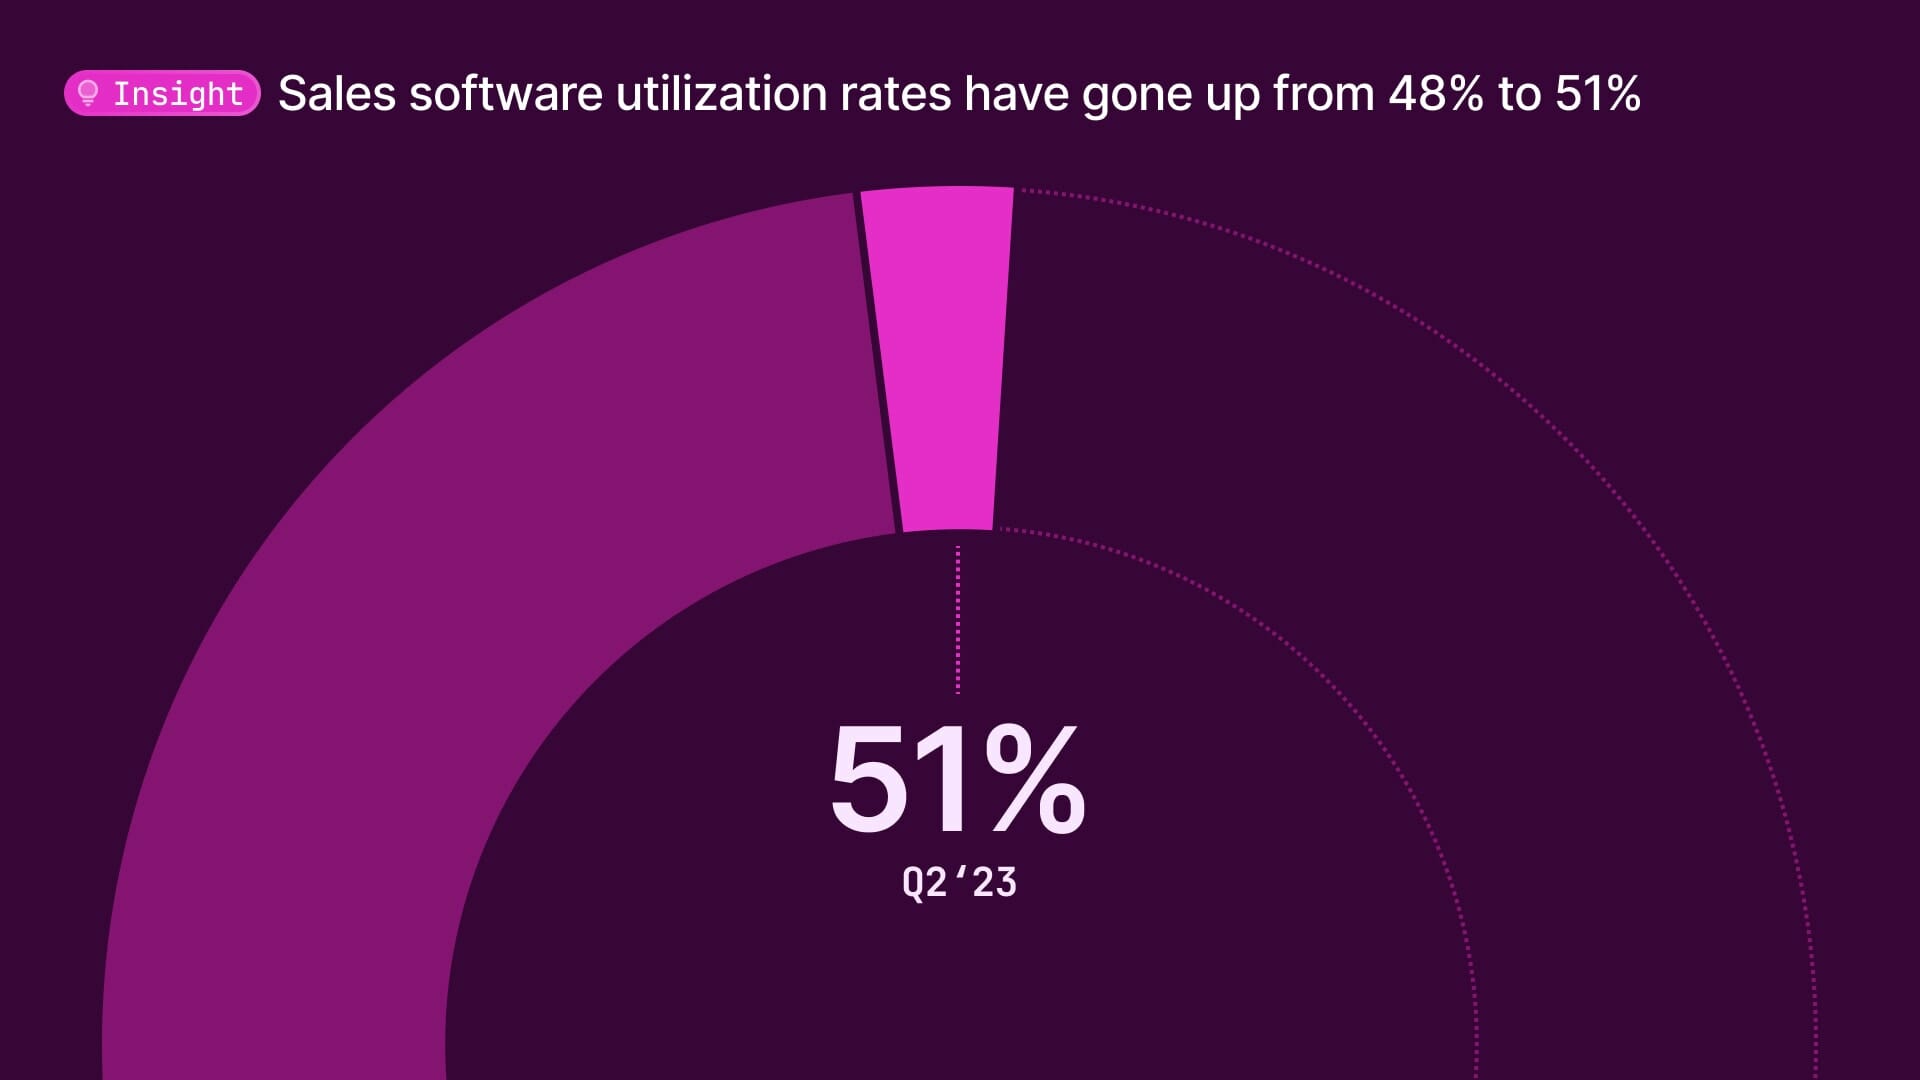 Sales software license utilization rates